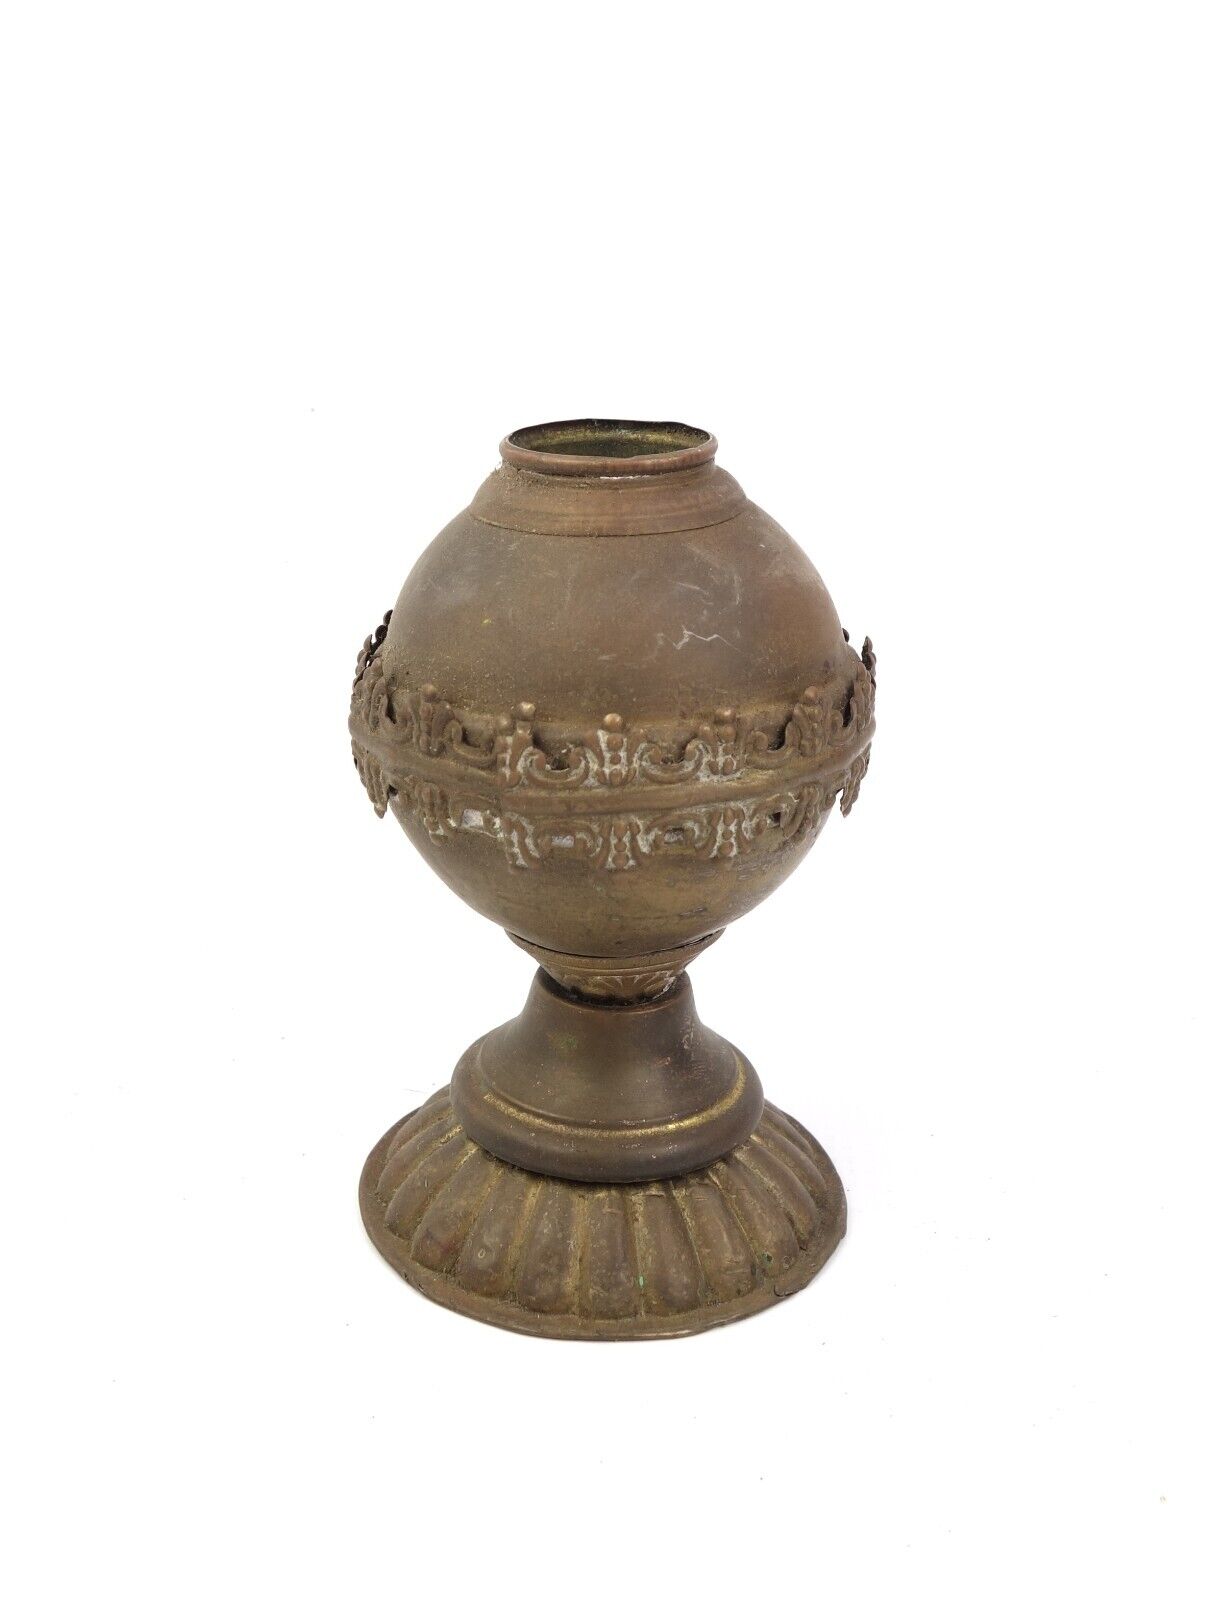 Antique 19th Century Ornate Brass Vase or Oil Lamp Base